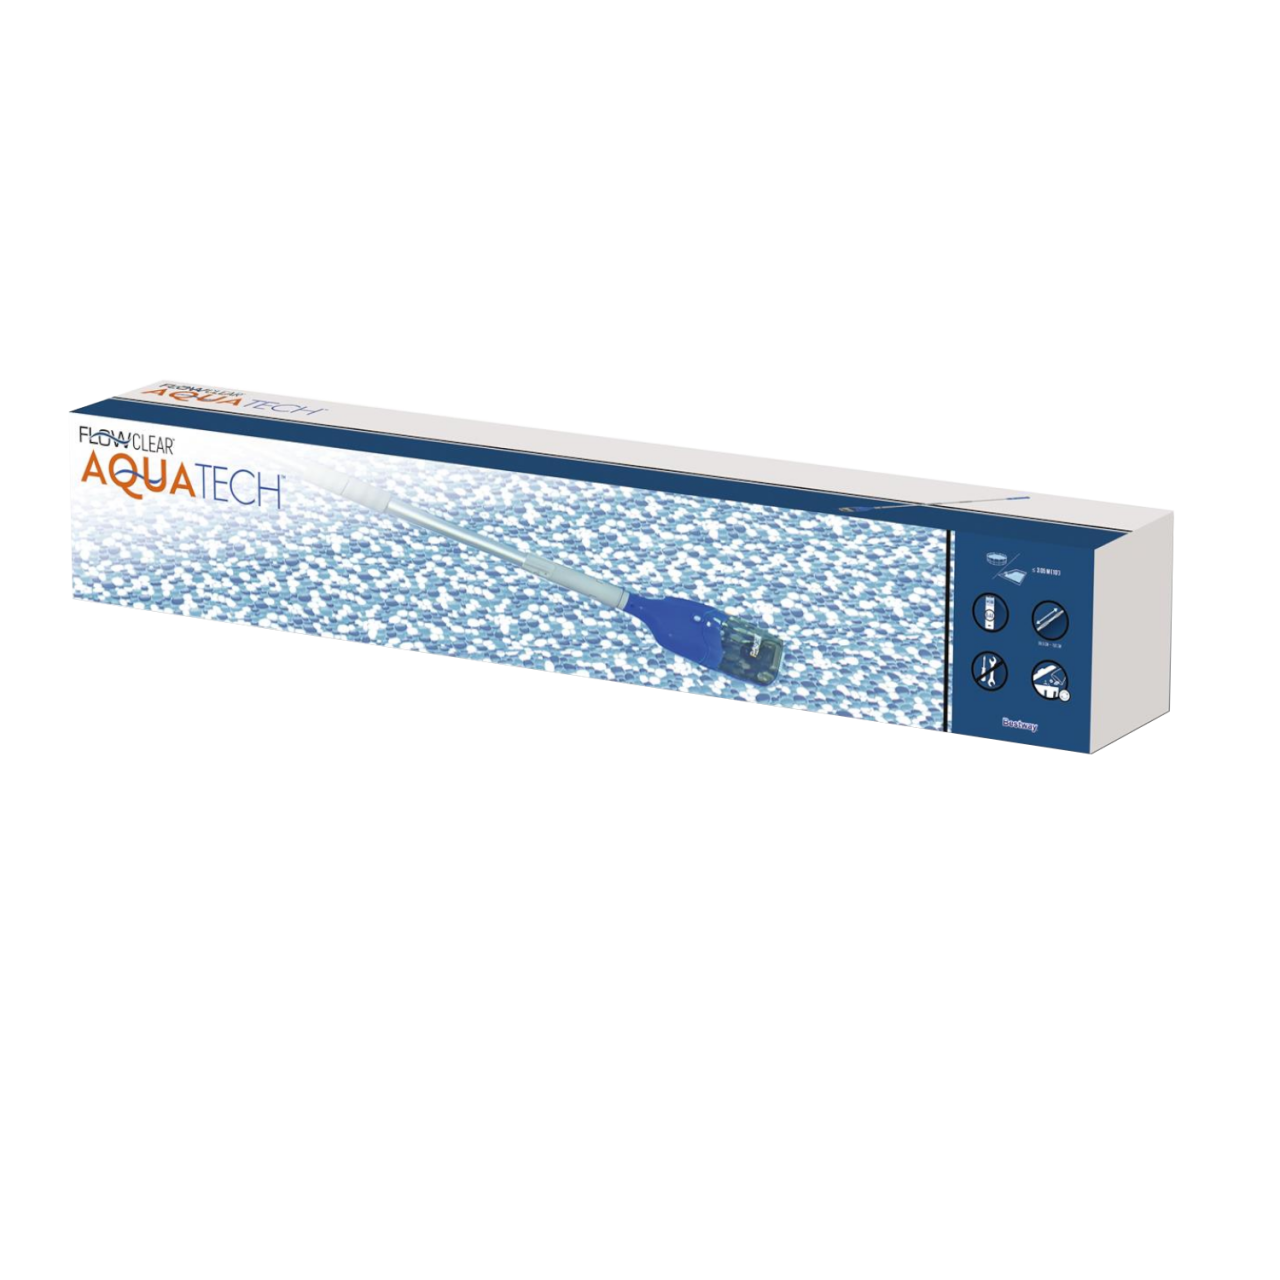 Bestway Flowclear batteriebetriebener Poolsauger AquaTech 58648 Pools bis Ø305cm